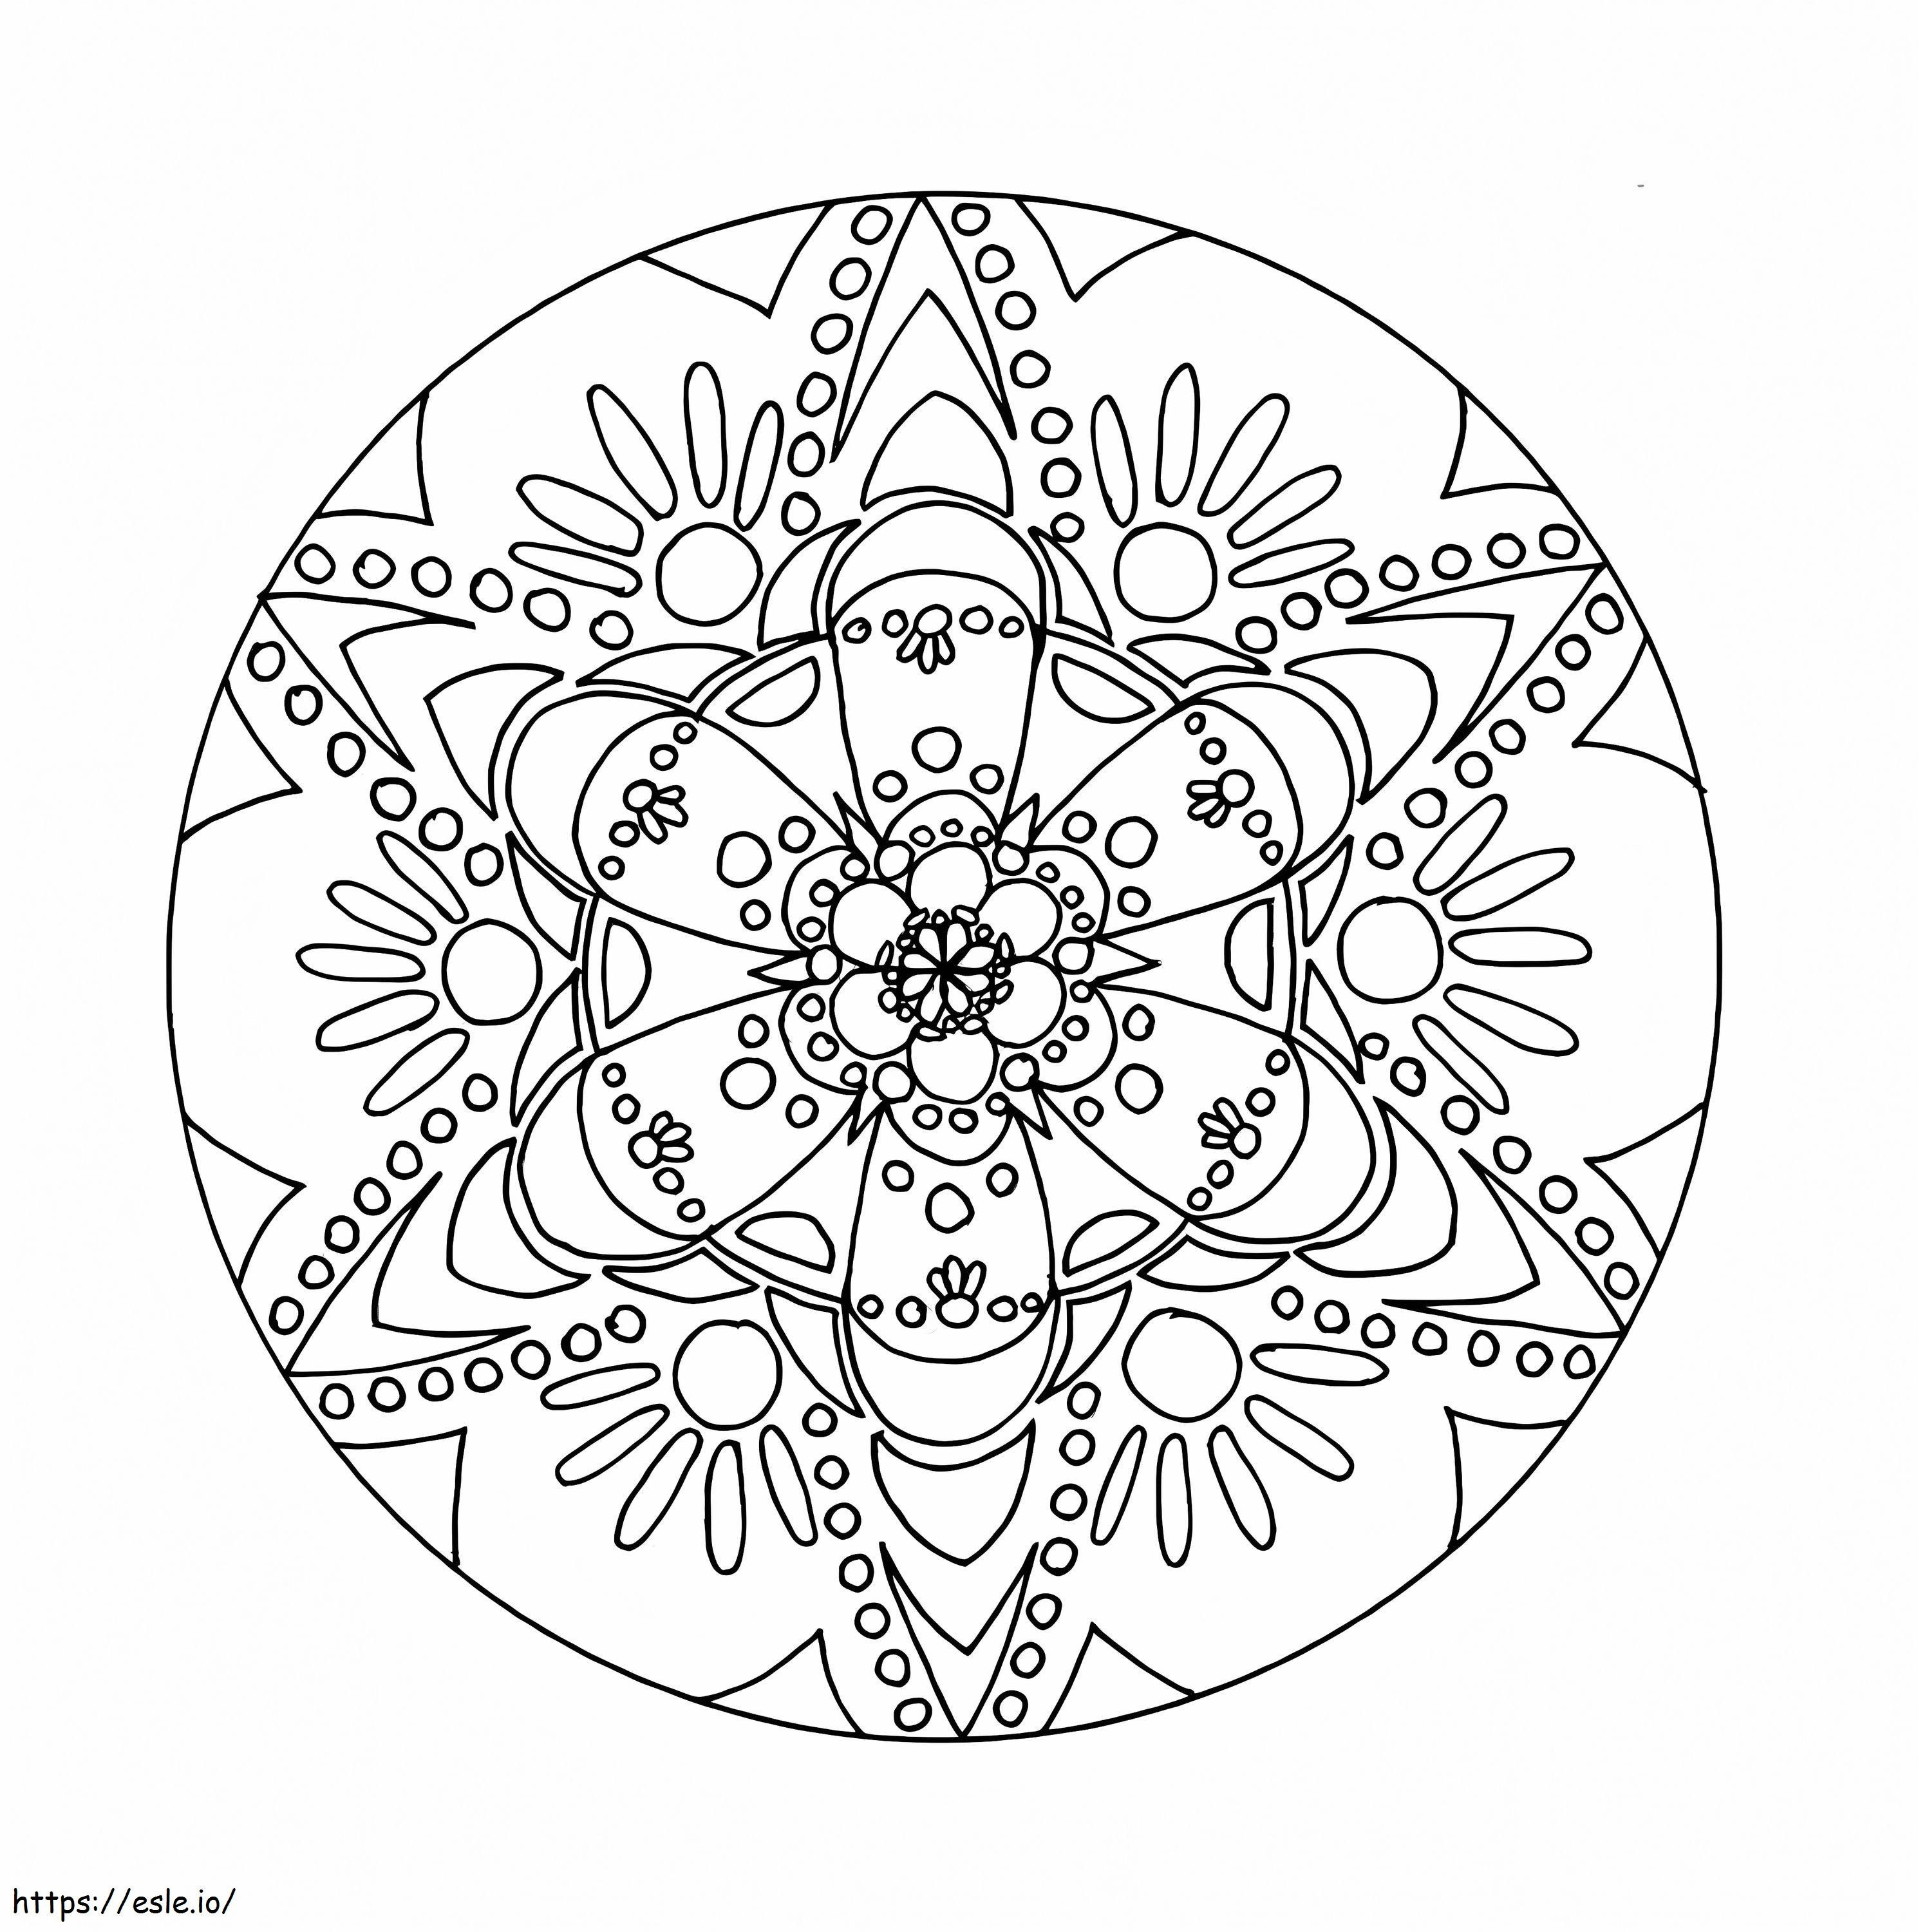 Abstract Circle coloring page